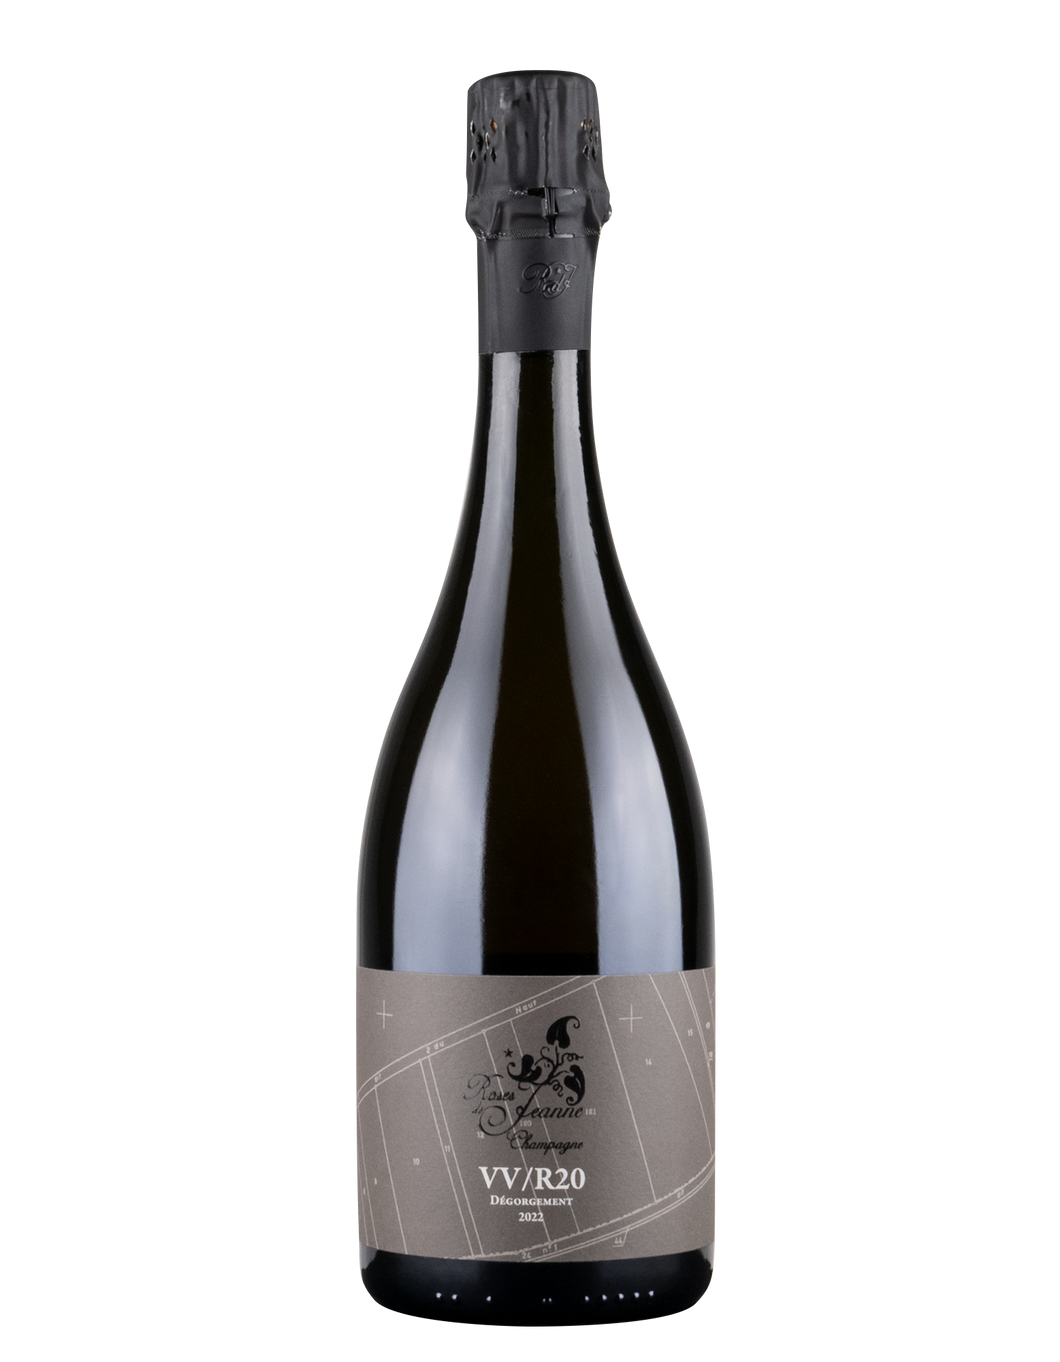 Champagne Brut Val Vilaine VV/R20